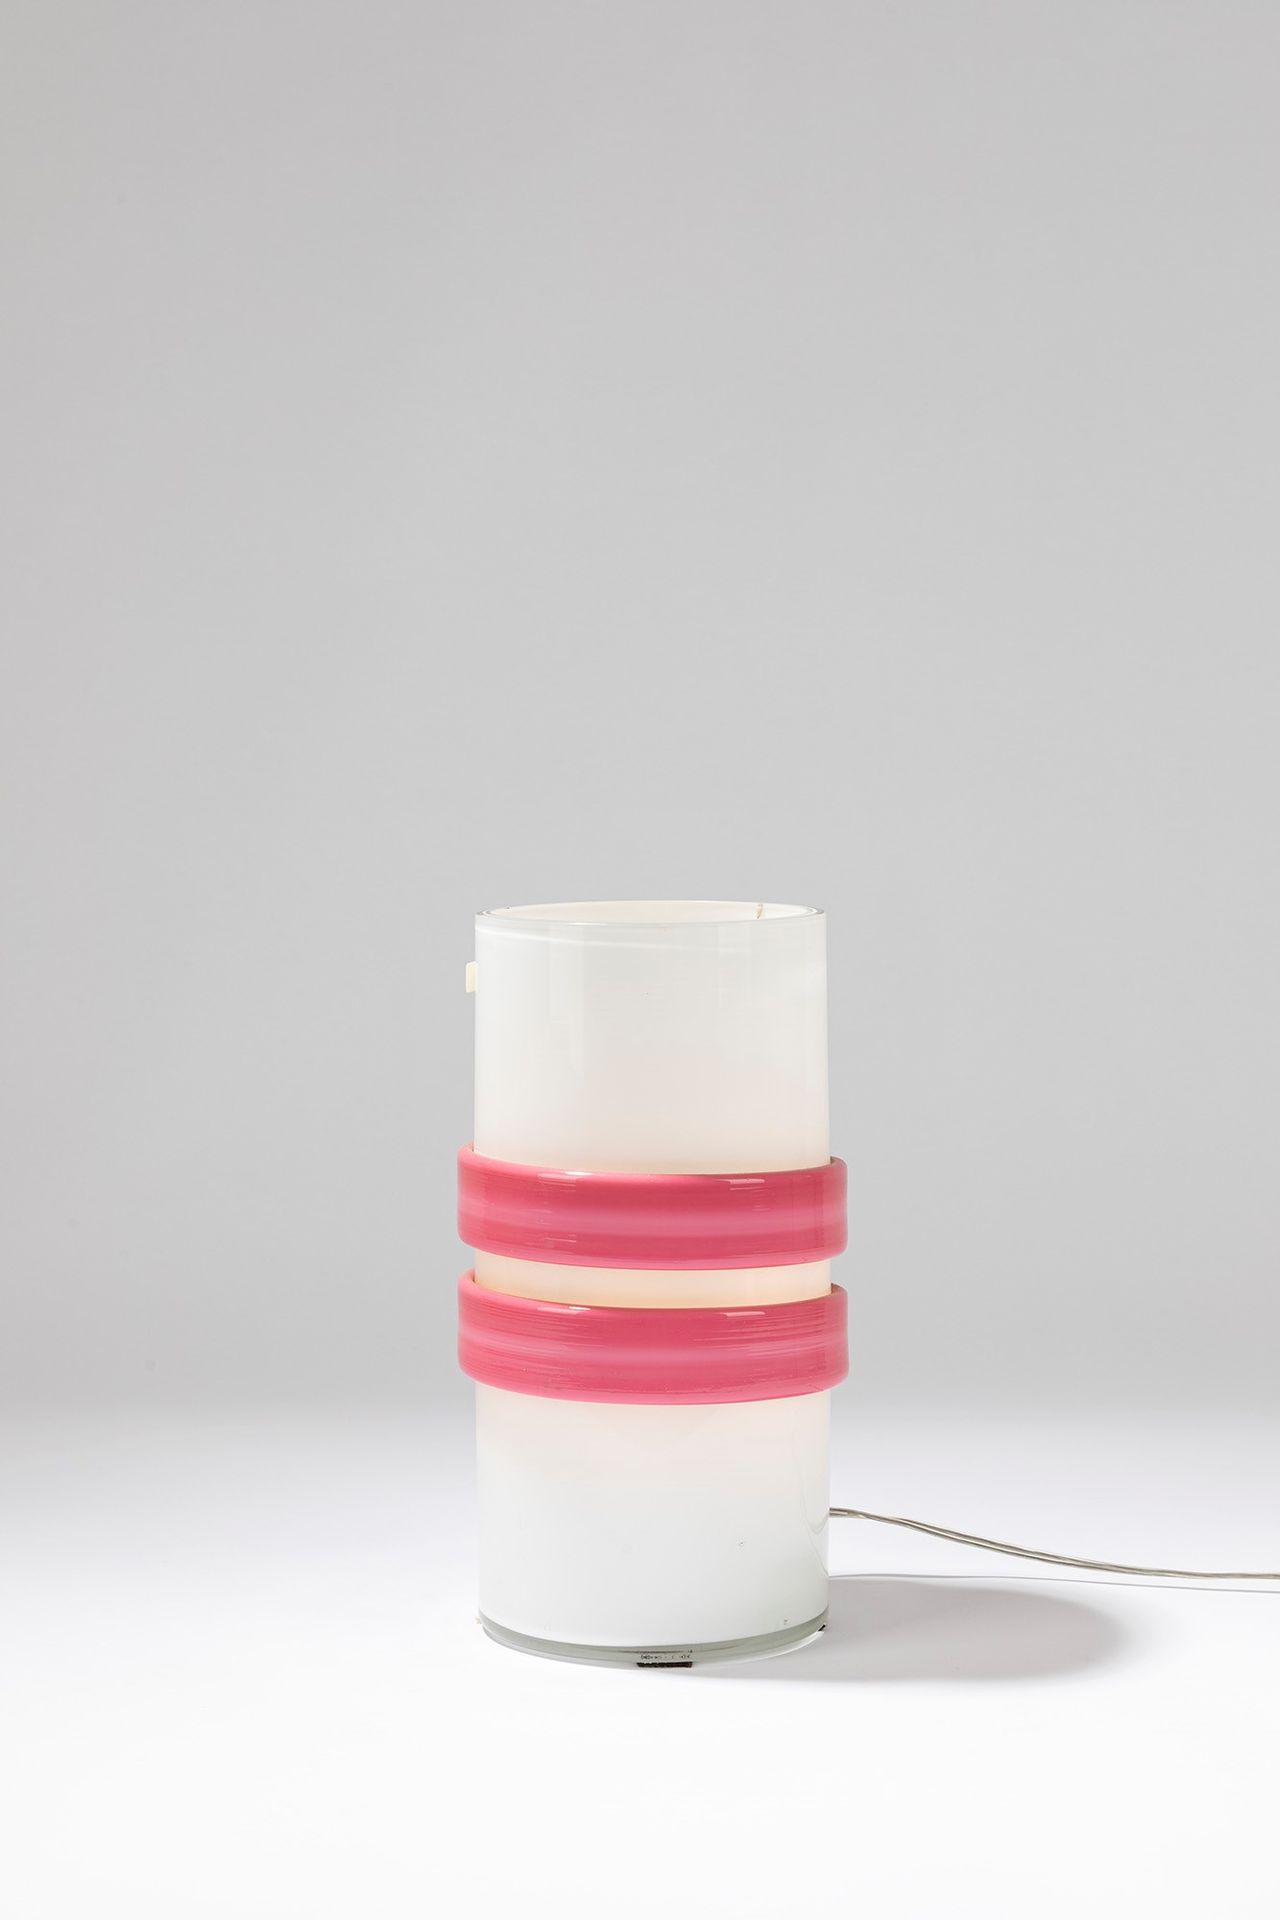 ITALIAN MANUFACTURE 台灯，1960年左右

直径12厘米，高24.5厘米
多色玻璃由一个白色圆柱体和两个粉红色的环组成。